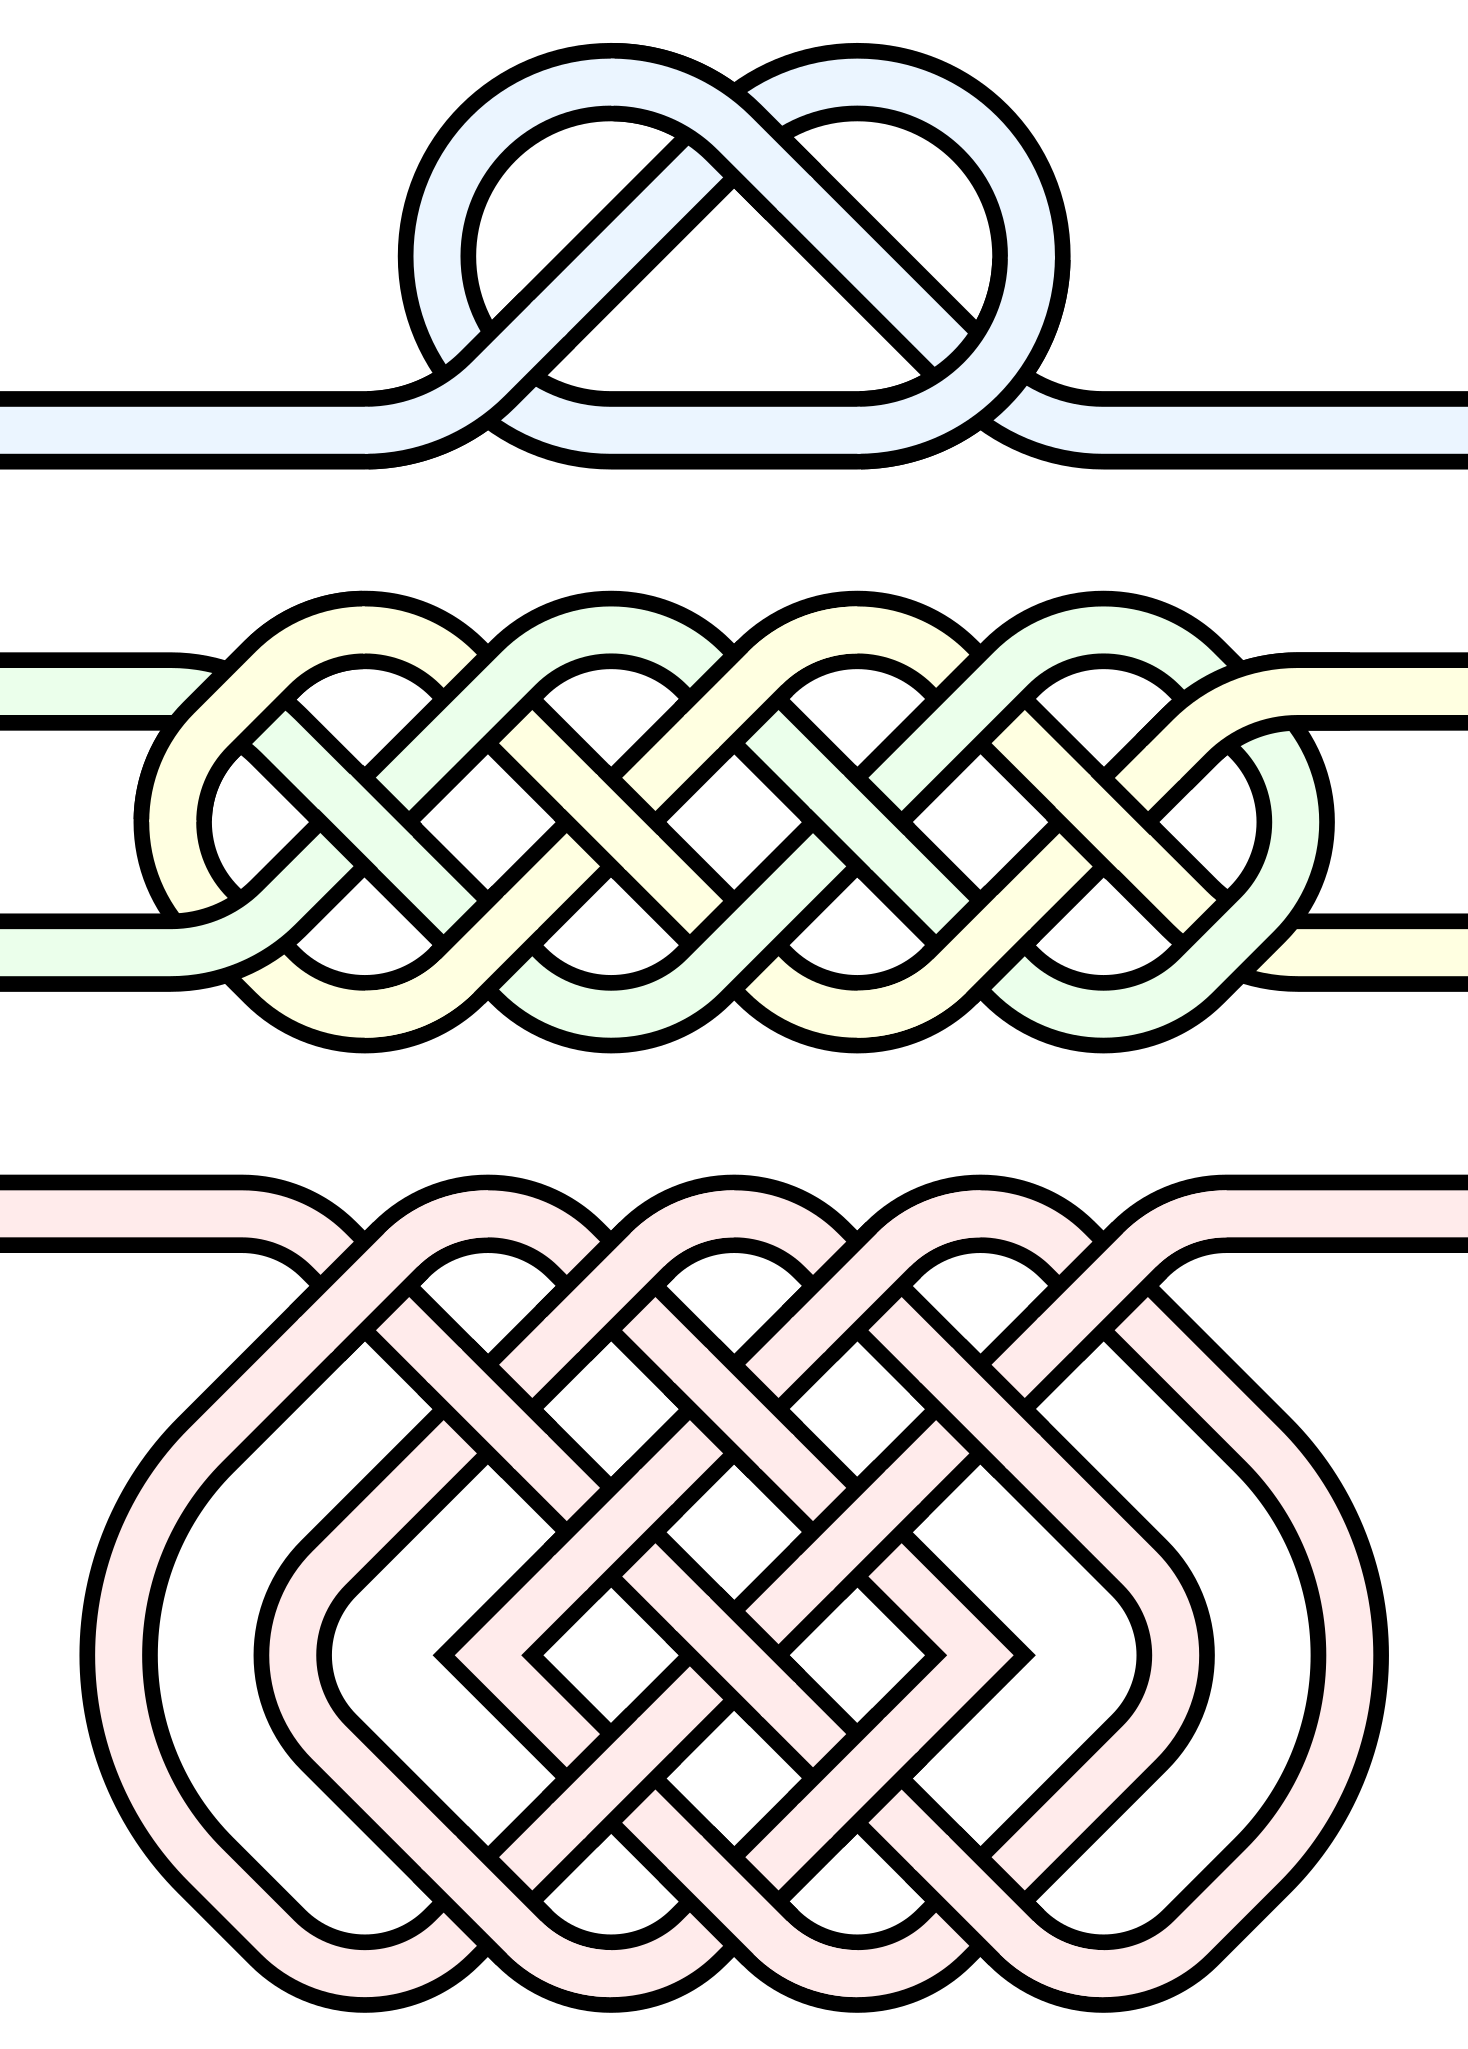 File:Knots-decorative-inline.svg - Wikipedia